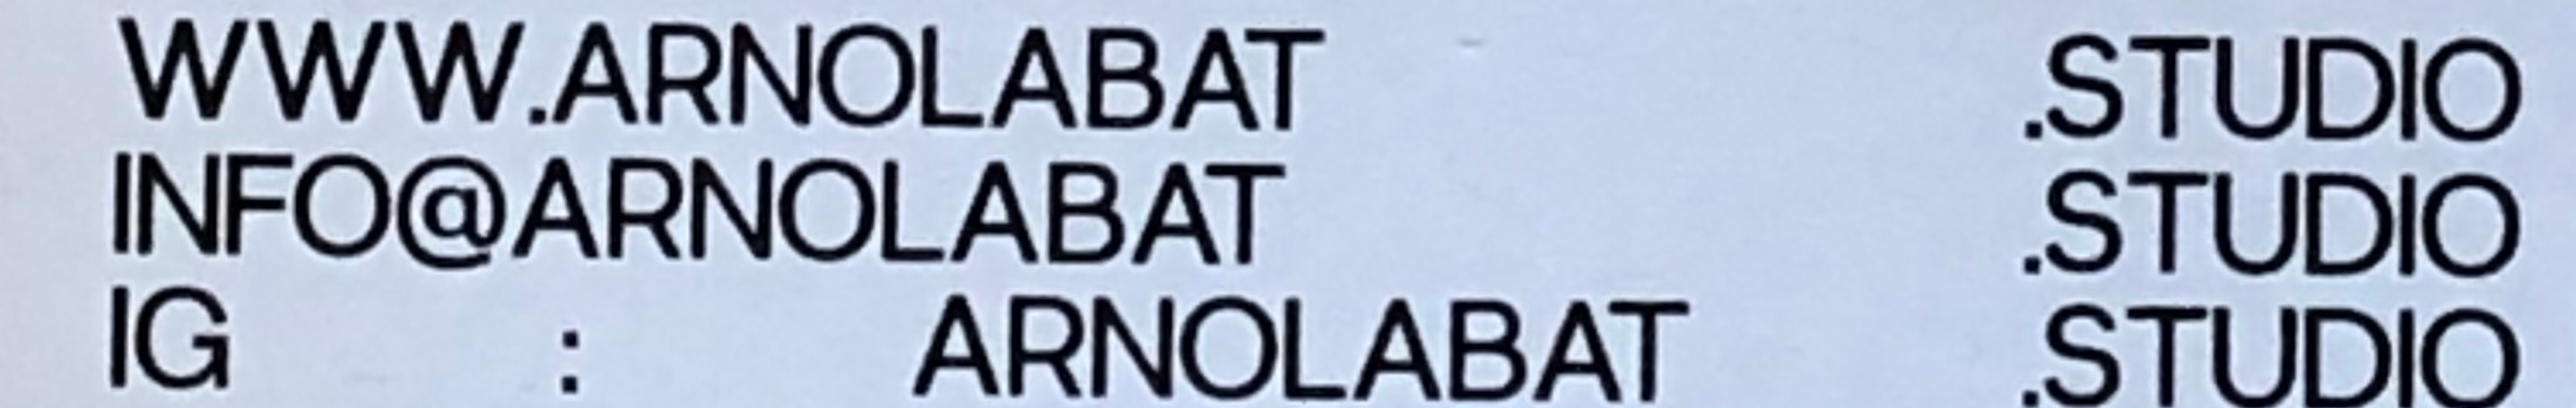 ARNO LABAT's profile banner